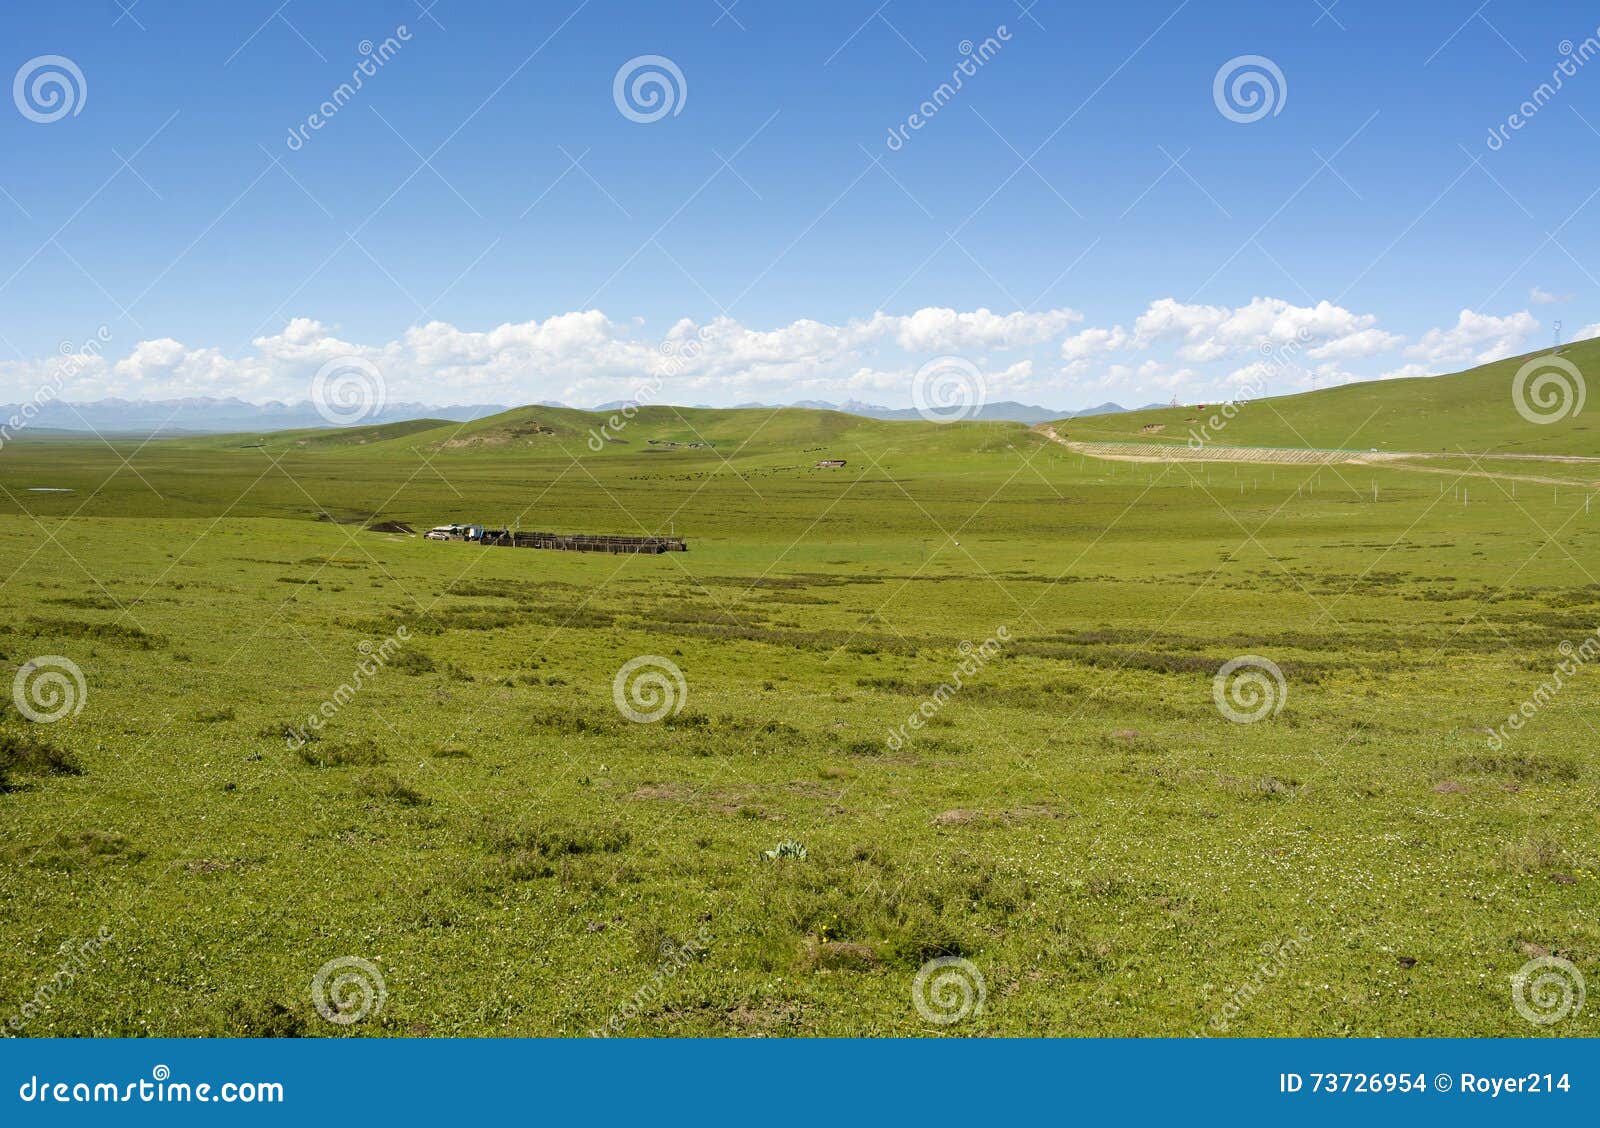 ruoergai grassland